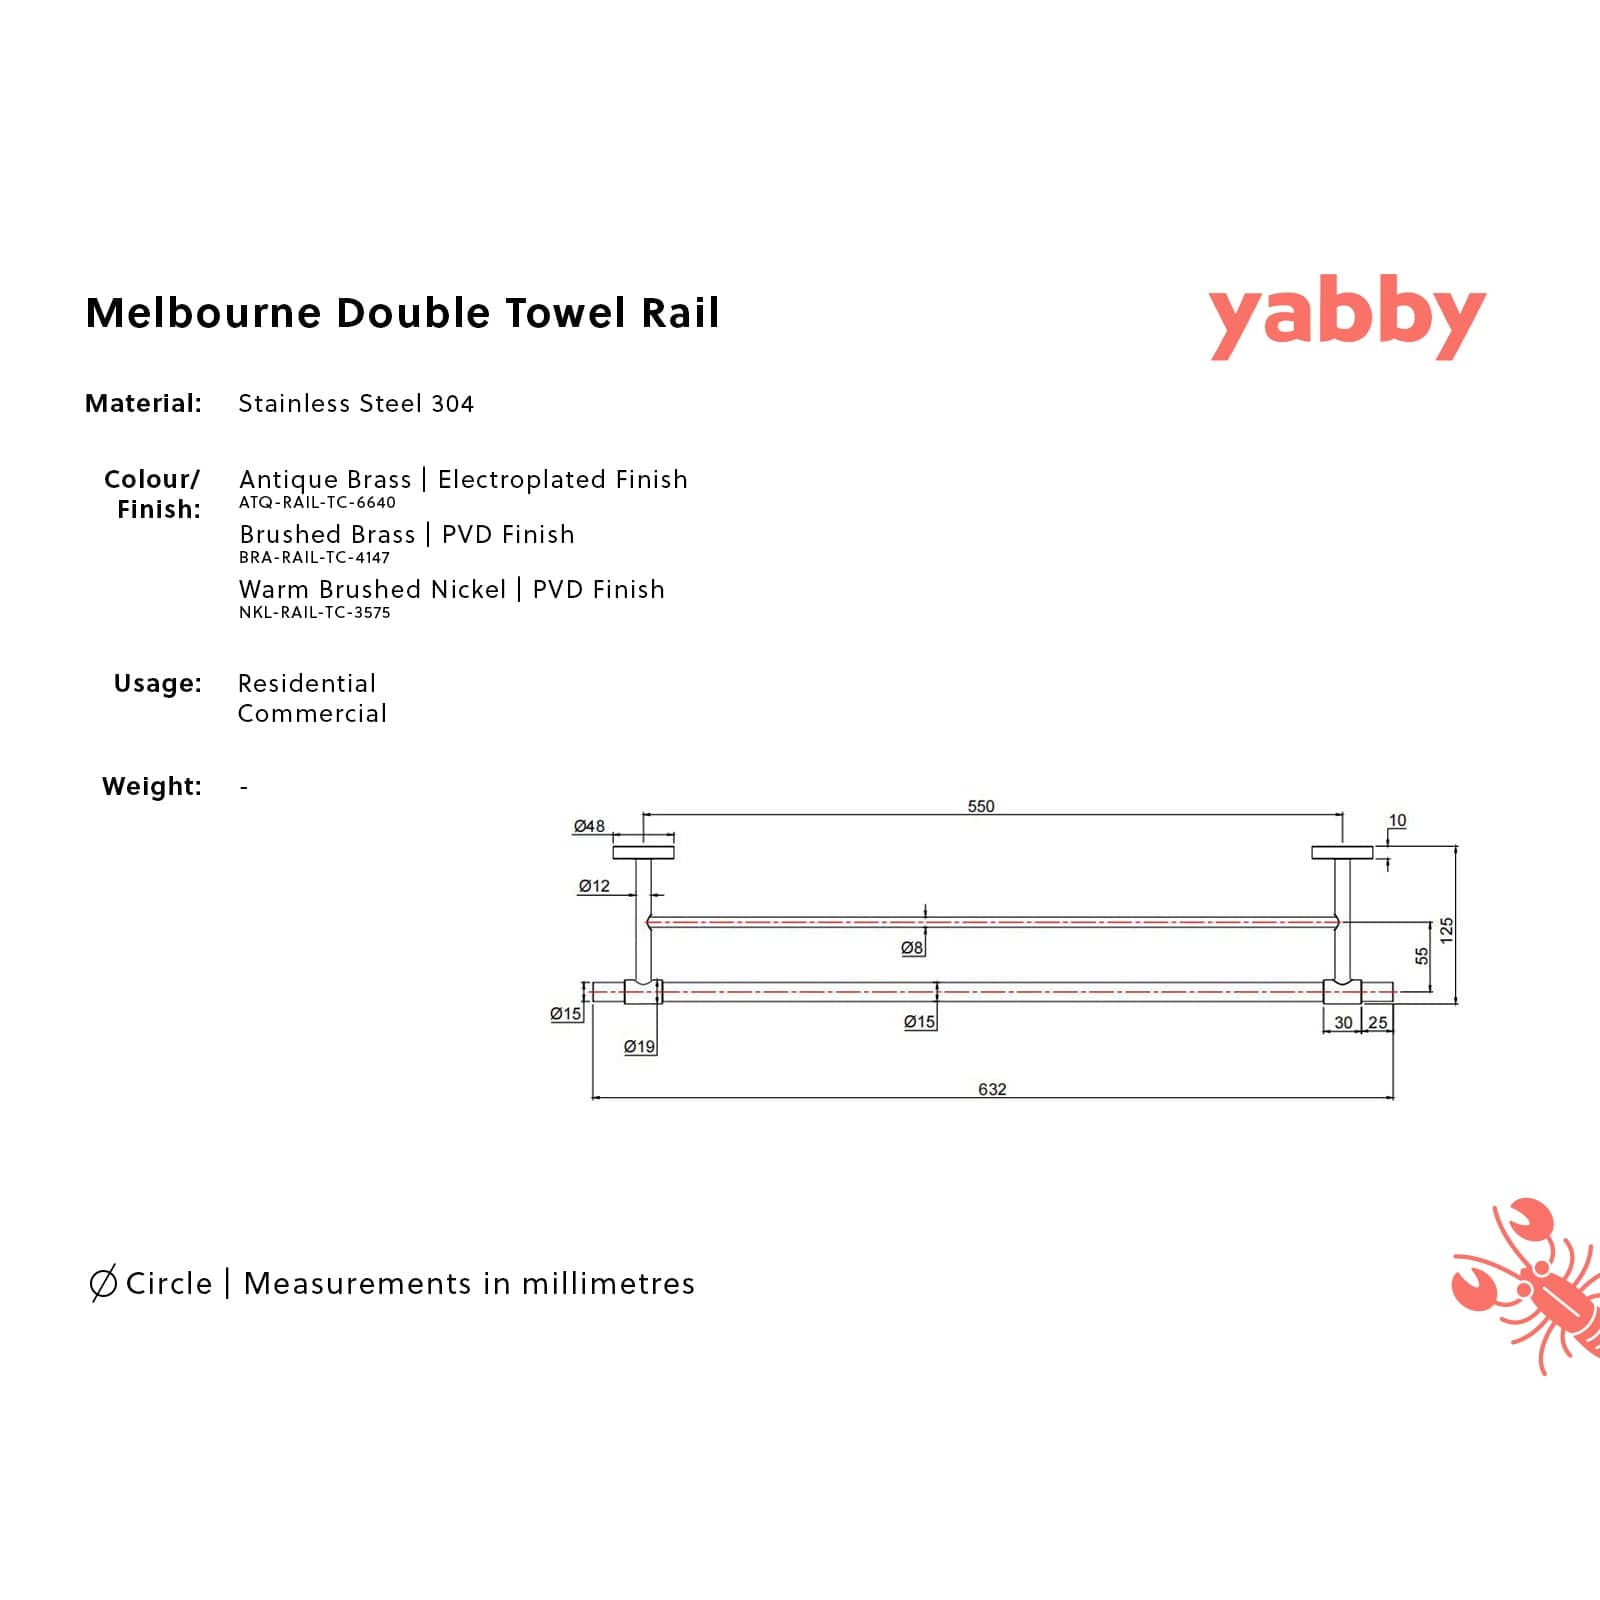 TileCloud TAPWARE Melbourne Double Towel Rail Warm Brushed Nickel 630mm